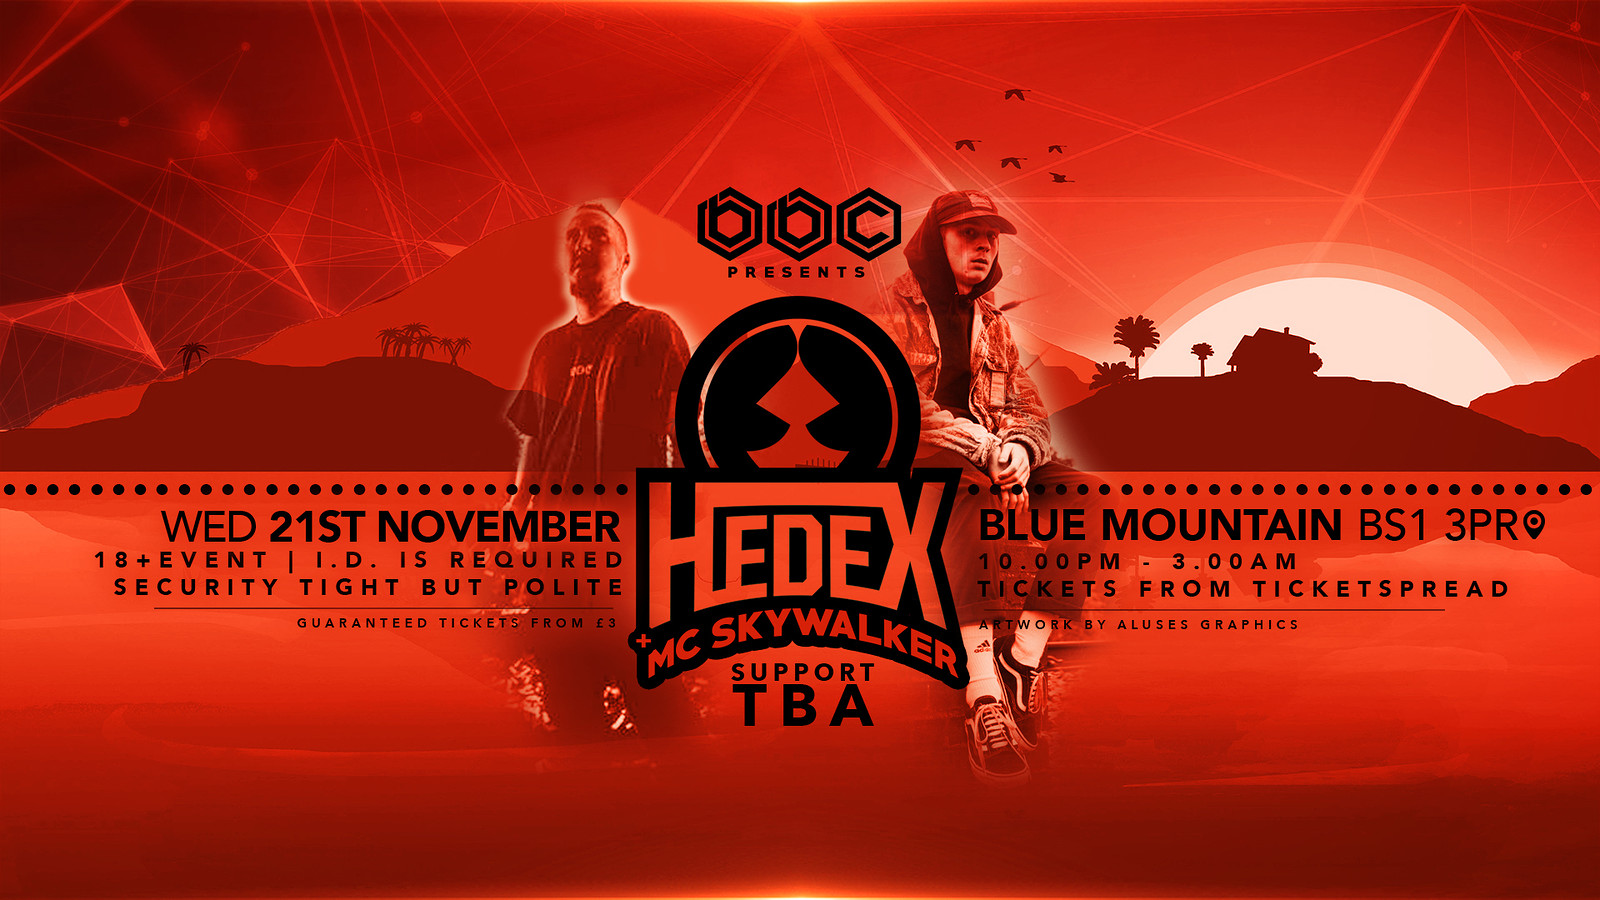 BBC Presents: Hedex & MC Skywalker at Blue Mountain